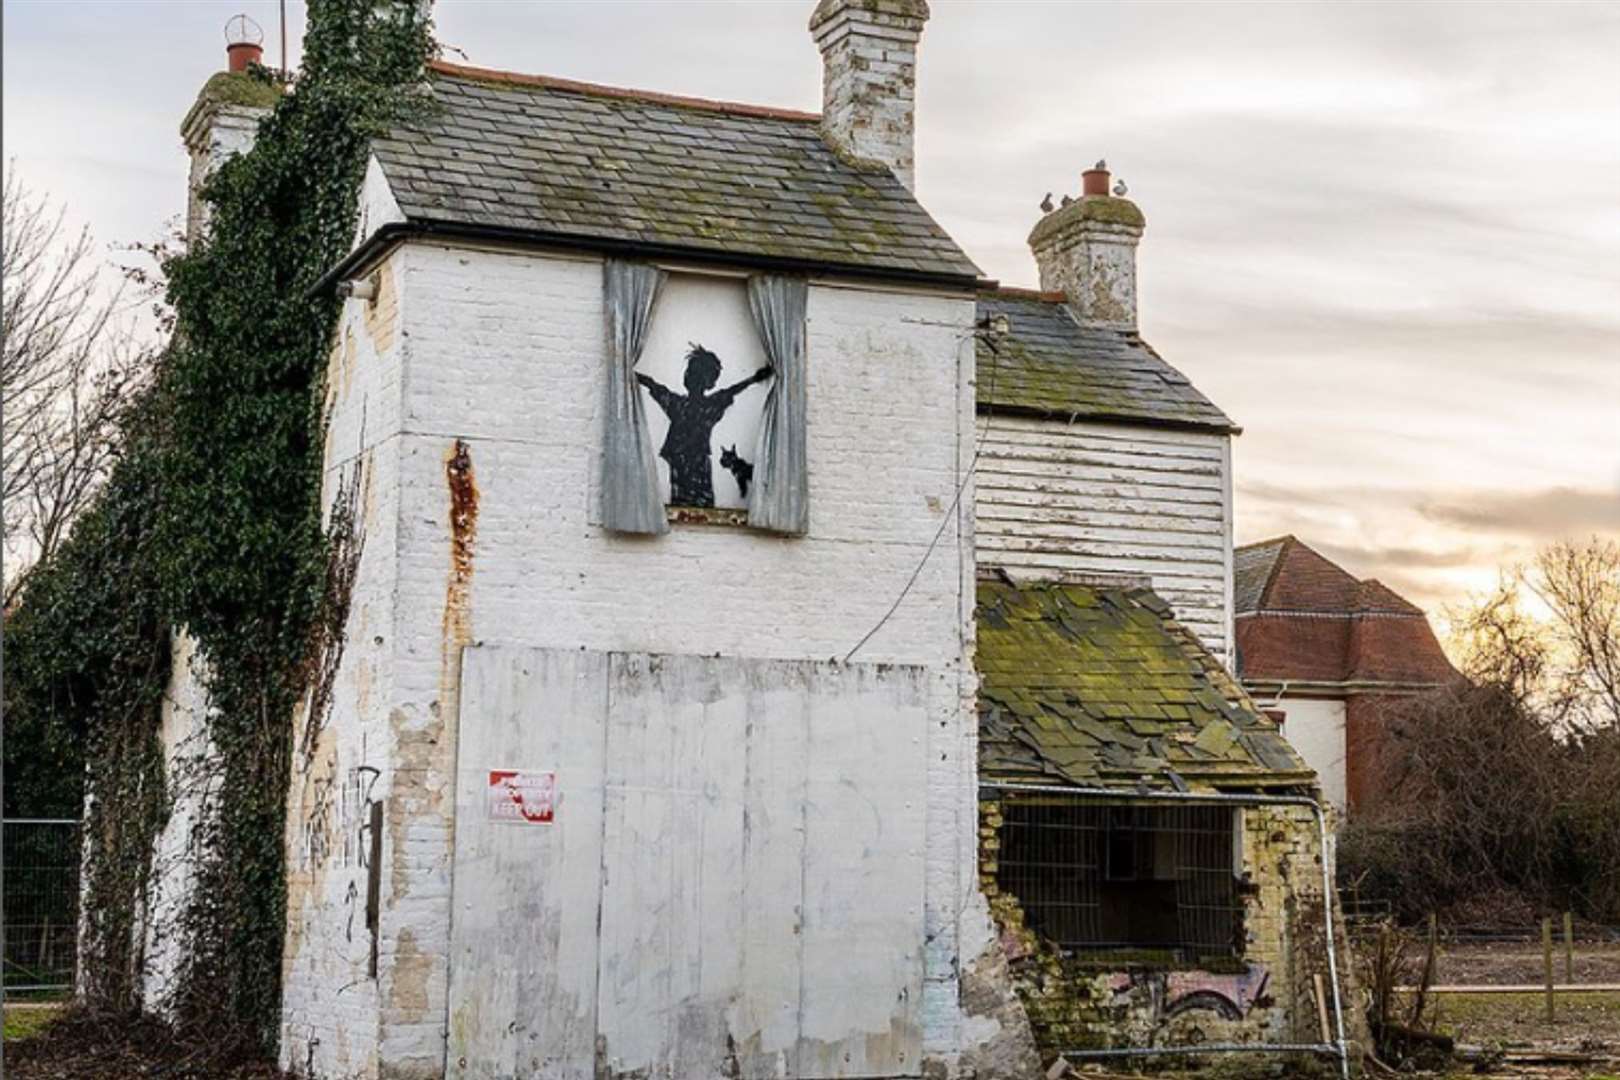 Banksy has confirmed the Herne Bay artwork is his. Picture: Banksy/Instagram